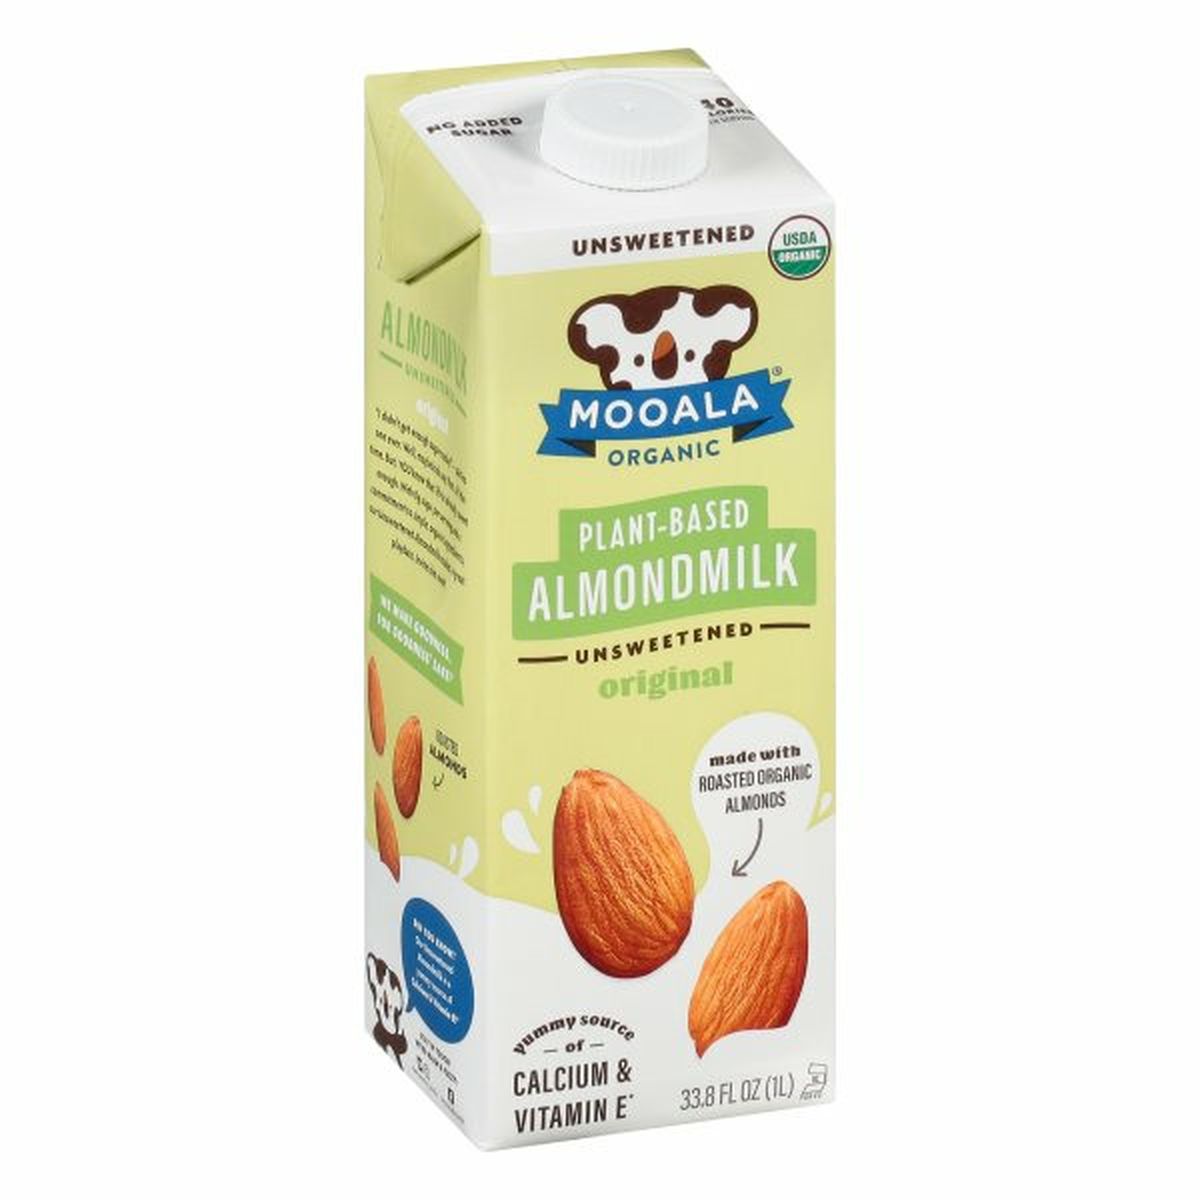 Calories in Mooala Almondmilk, Plant-Based, Unsweetened, Original